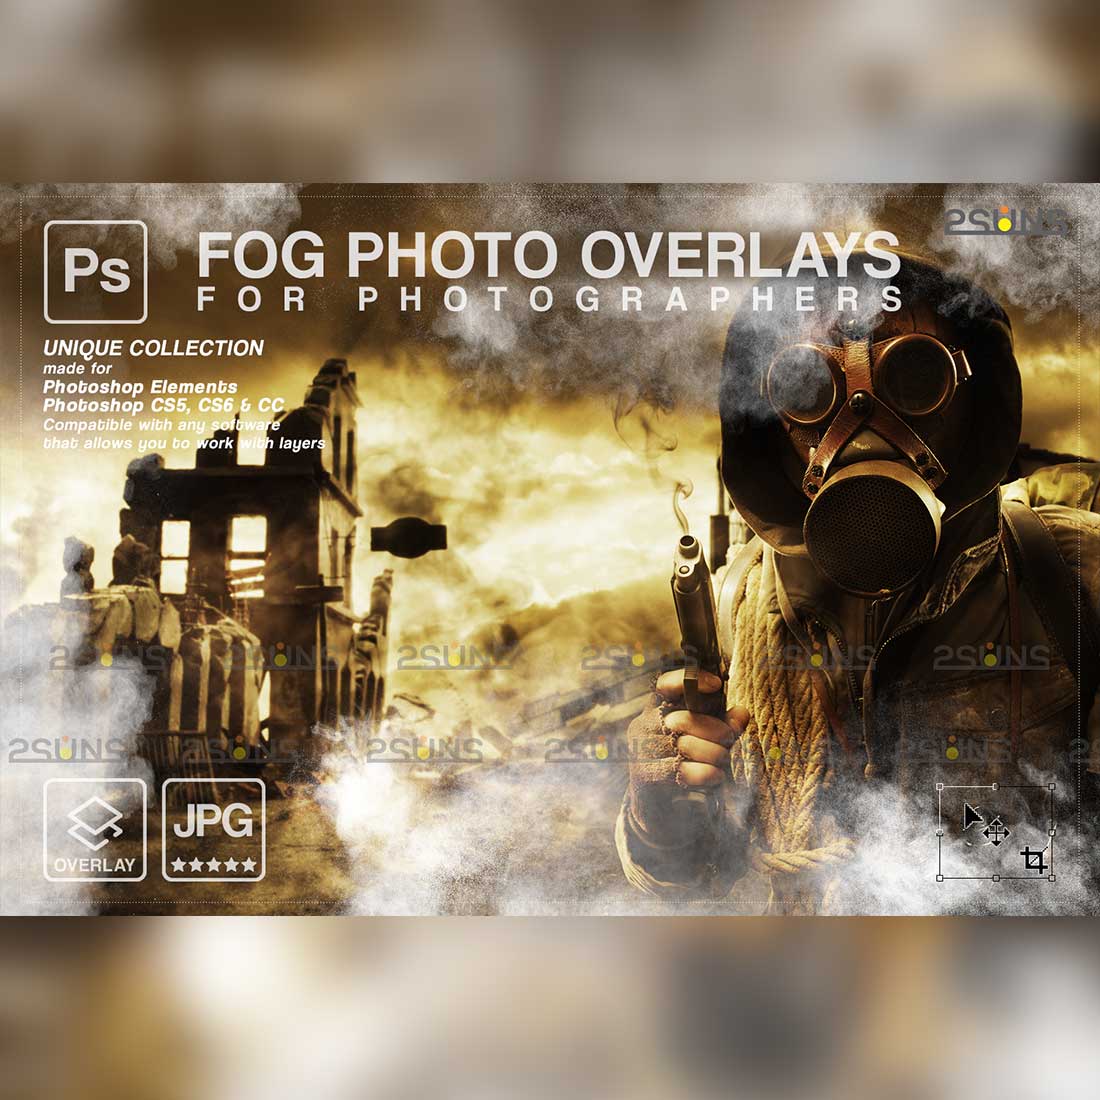 White Smoke And Fog Photoshop Overlay Cover Image.